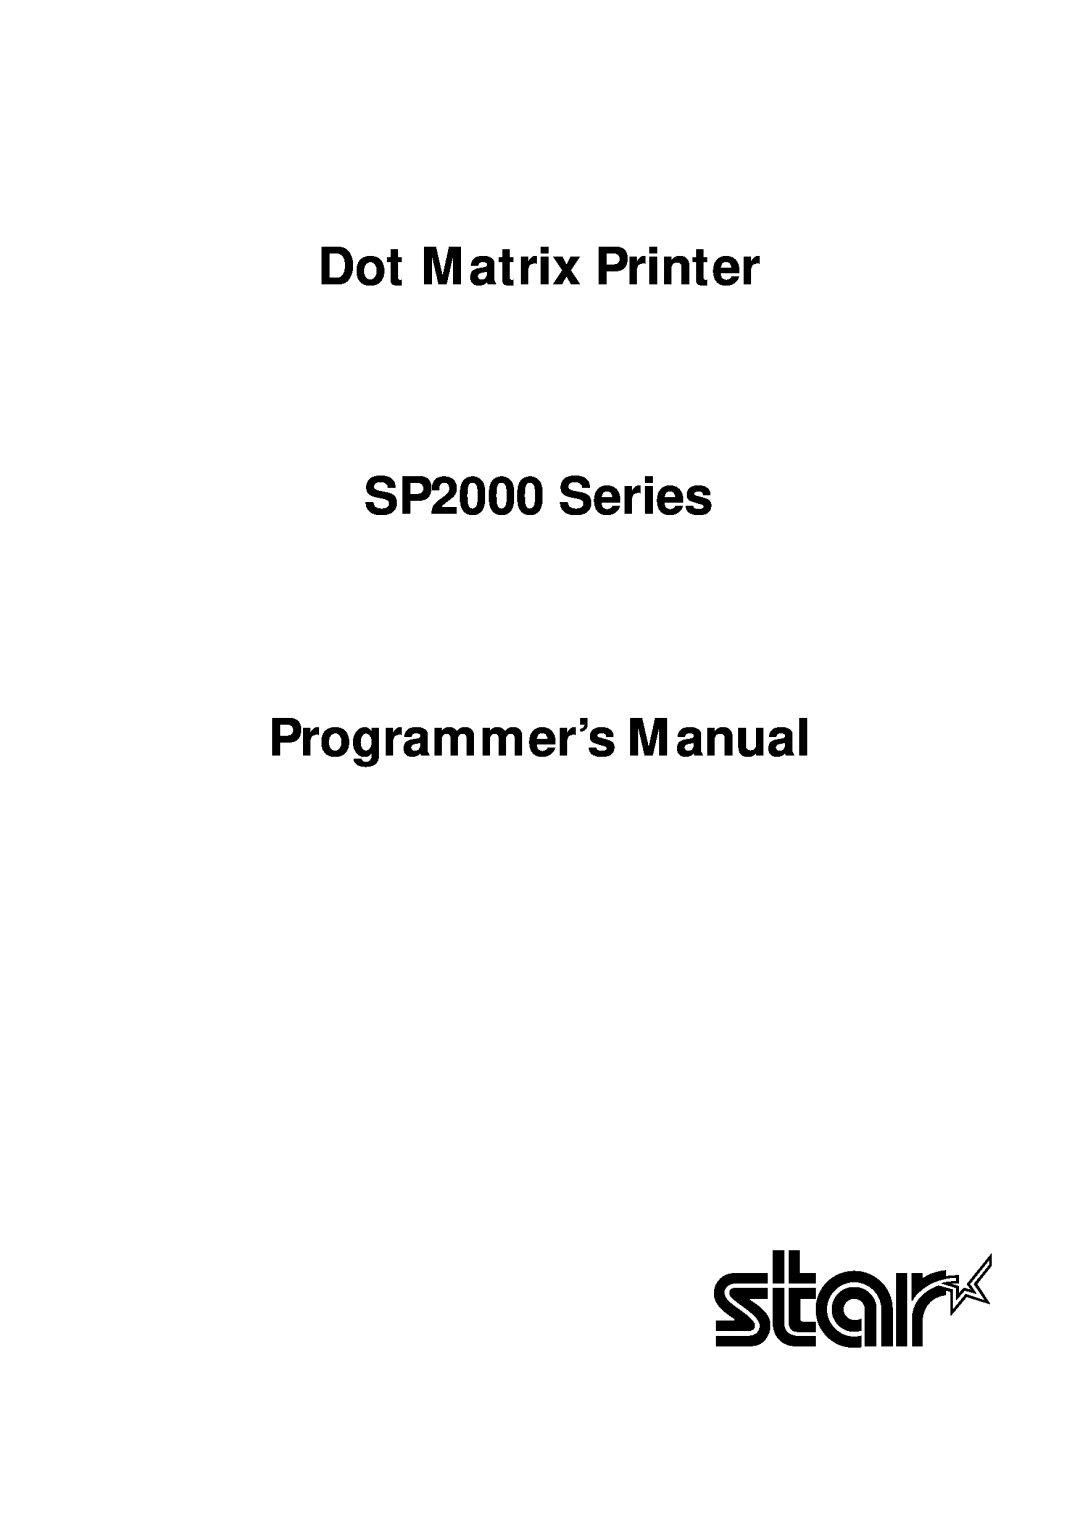 Star Micronics manual Dot Matrix Printer SP2000 Series Programmer’s Manual 